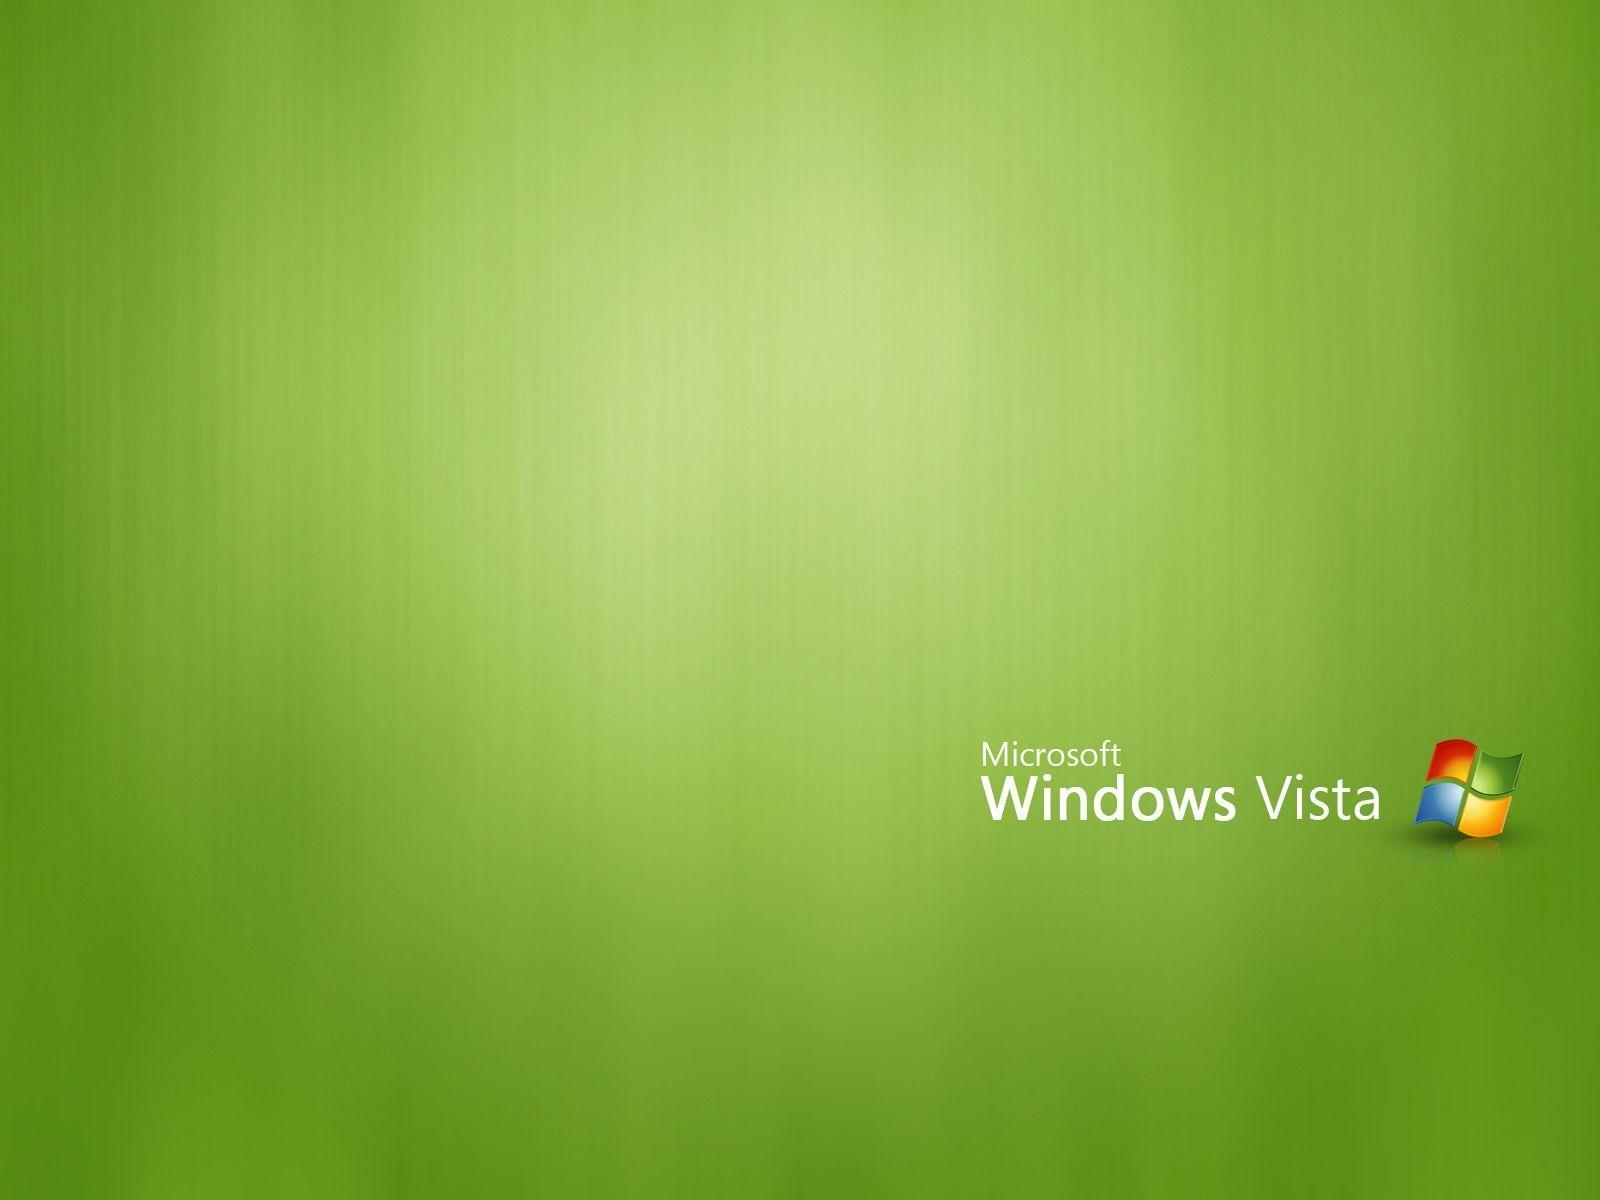 Free Microsoft Windows 8 Wallpaper: Microsoft Windows Vista Orange